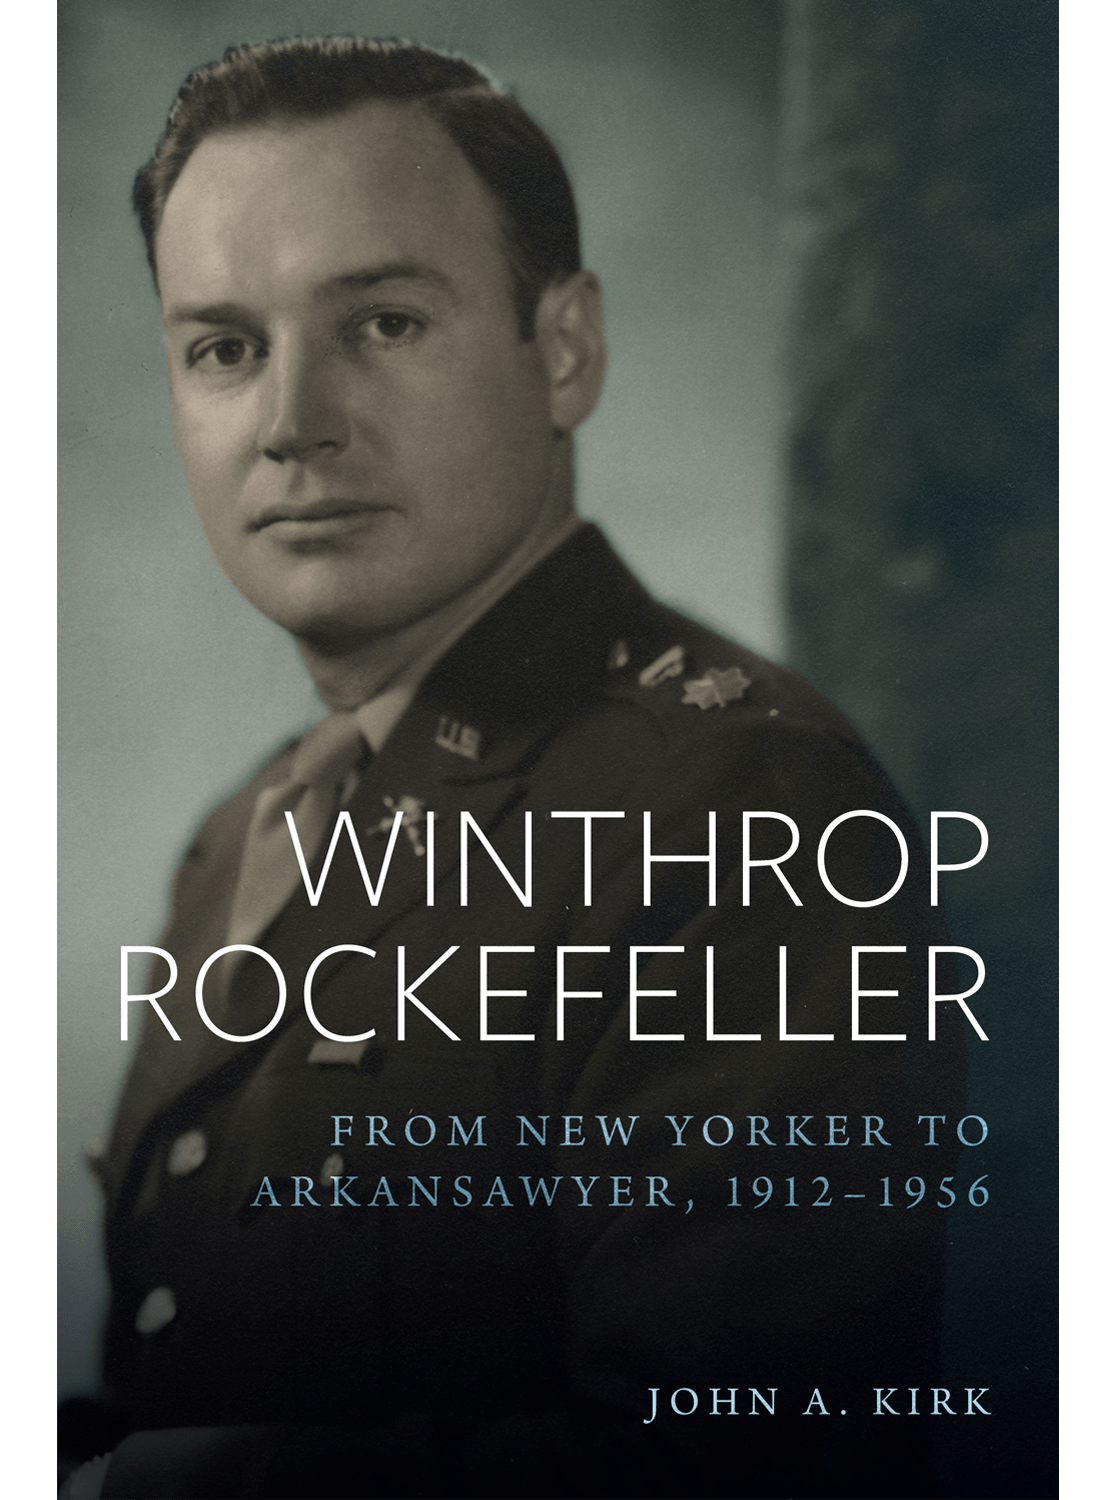 Winthrop Rockefeller by John Kirk cover image